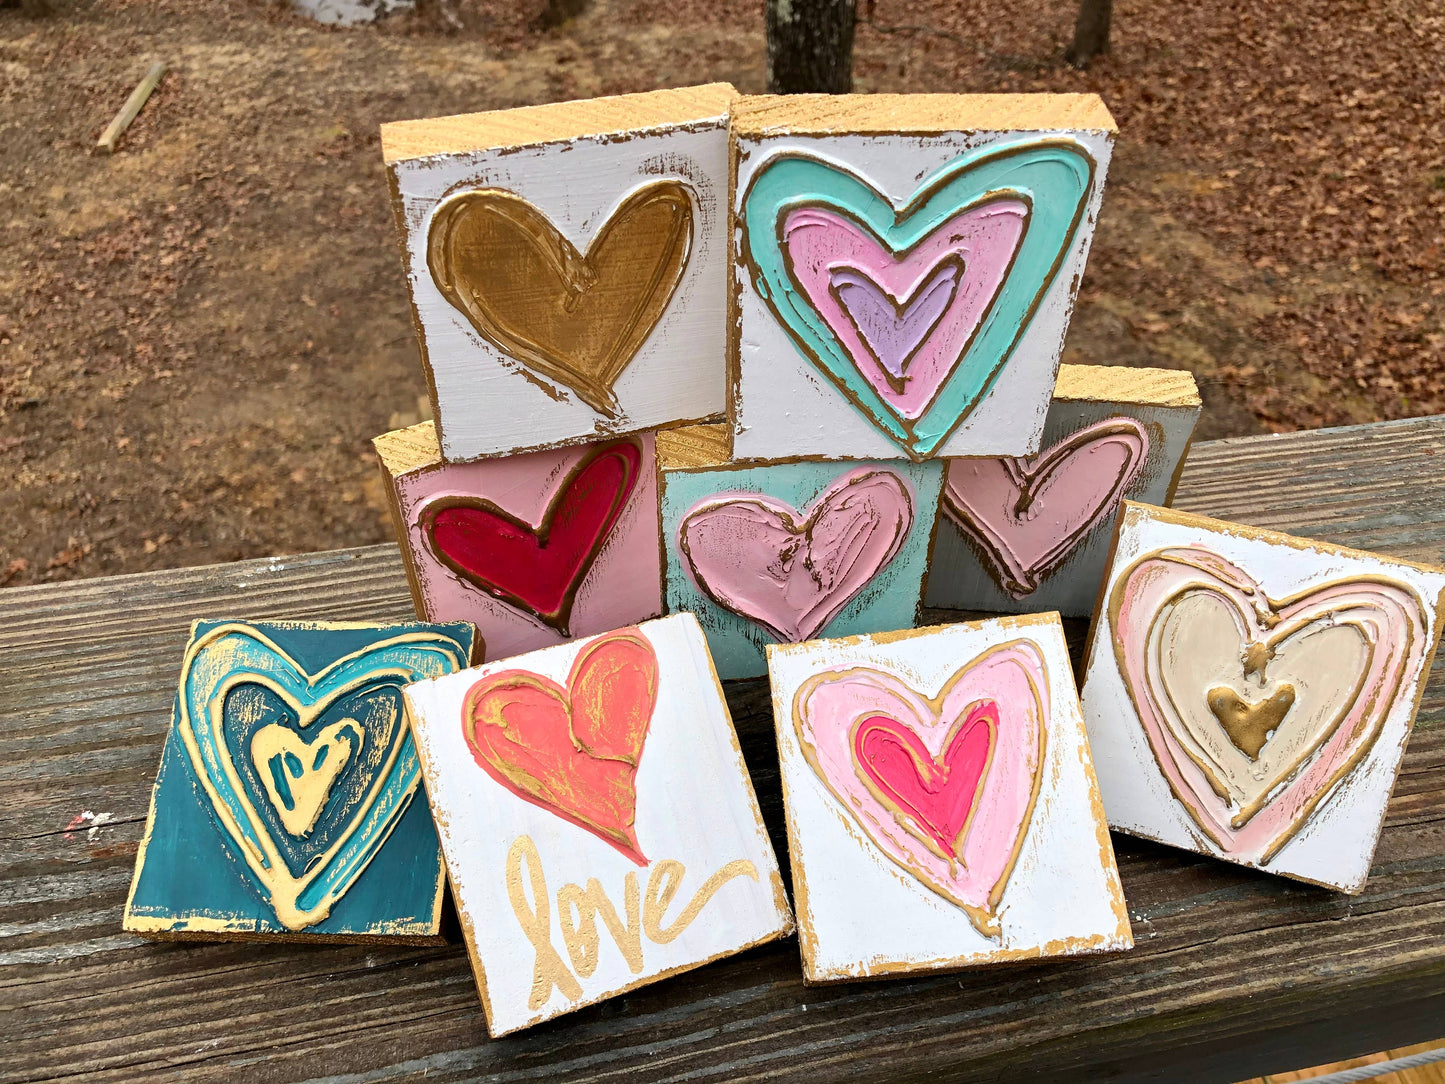 3x3 Heart Valentine handmade textured wood block - Peach/cream/white